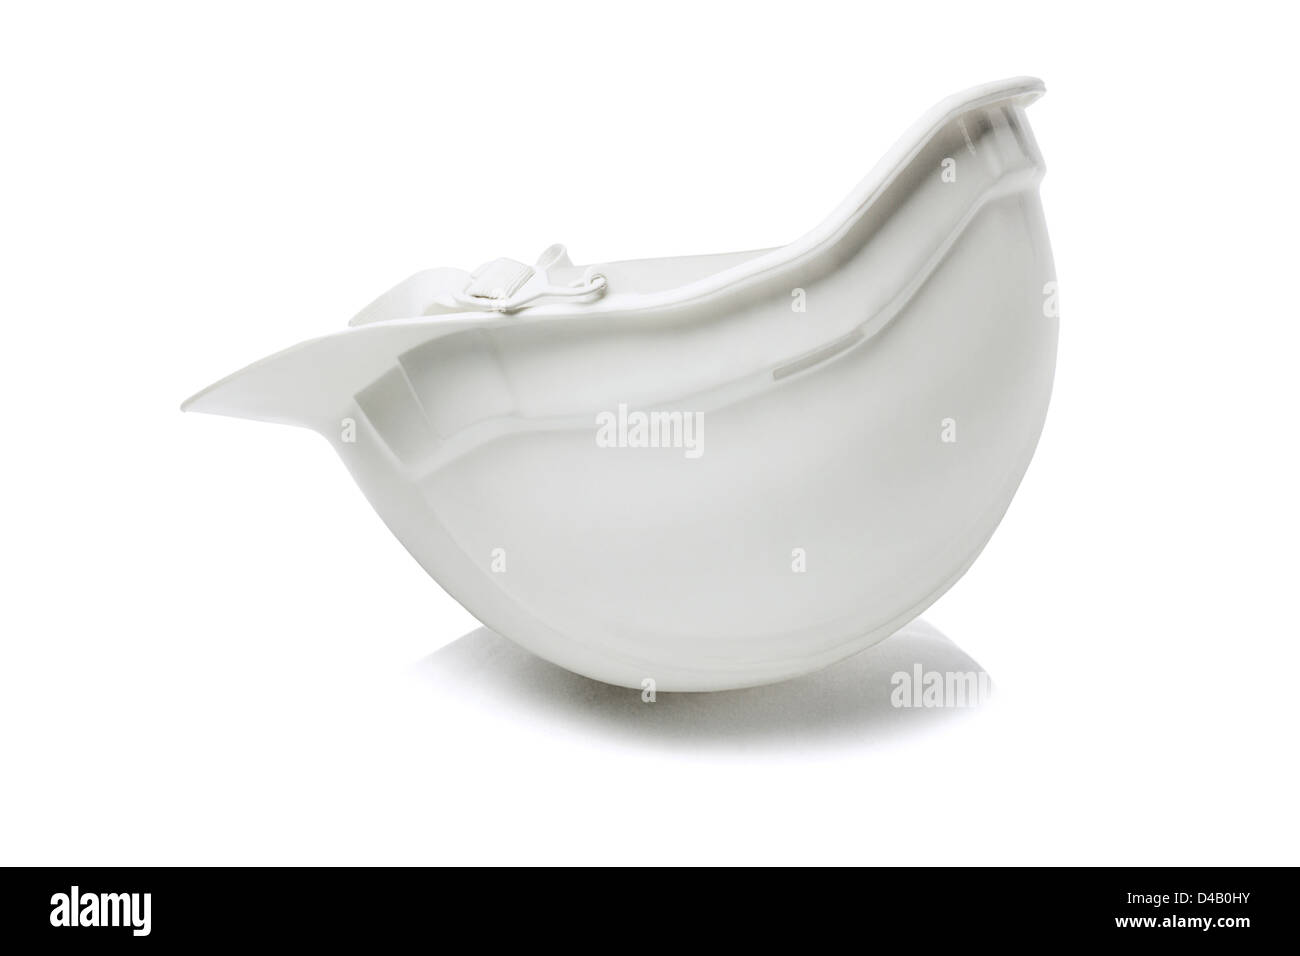 Plastic Safety Helmet on White Background Stock Photo